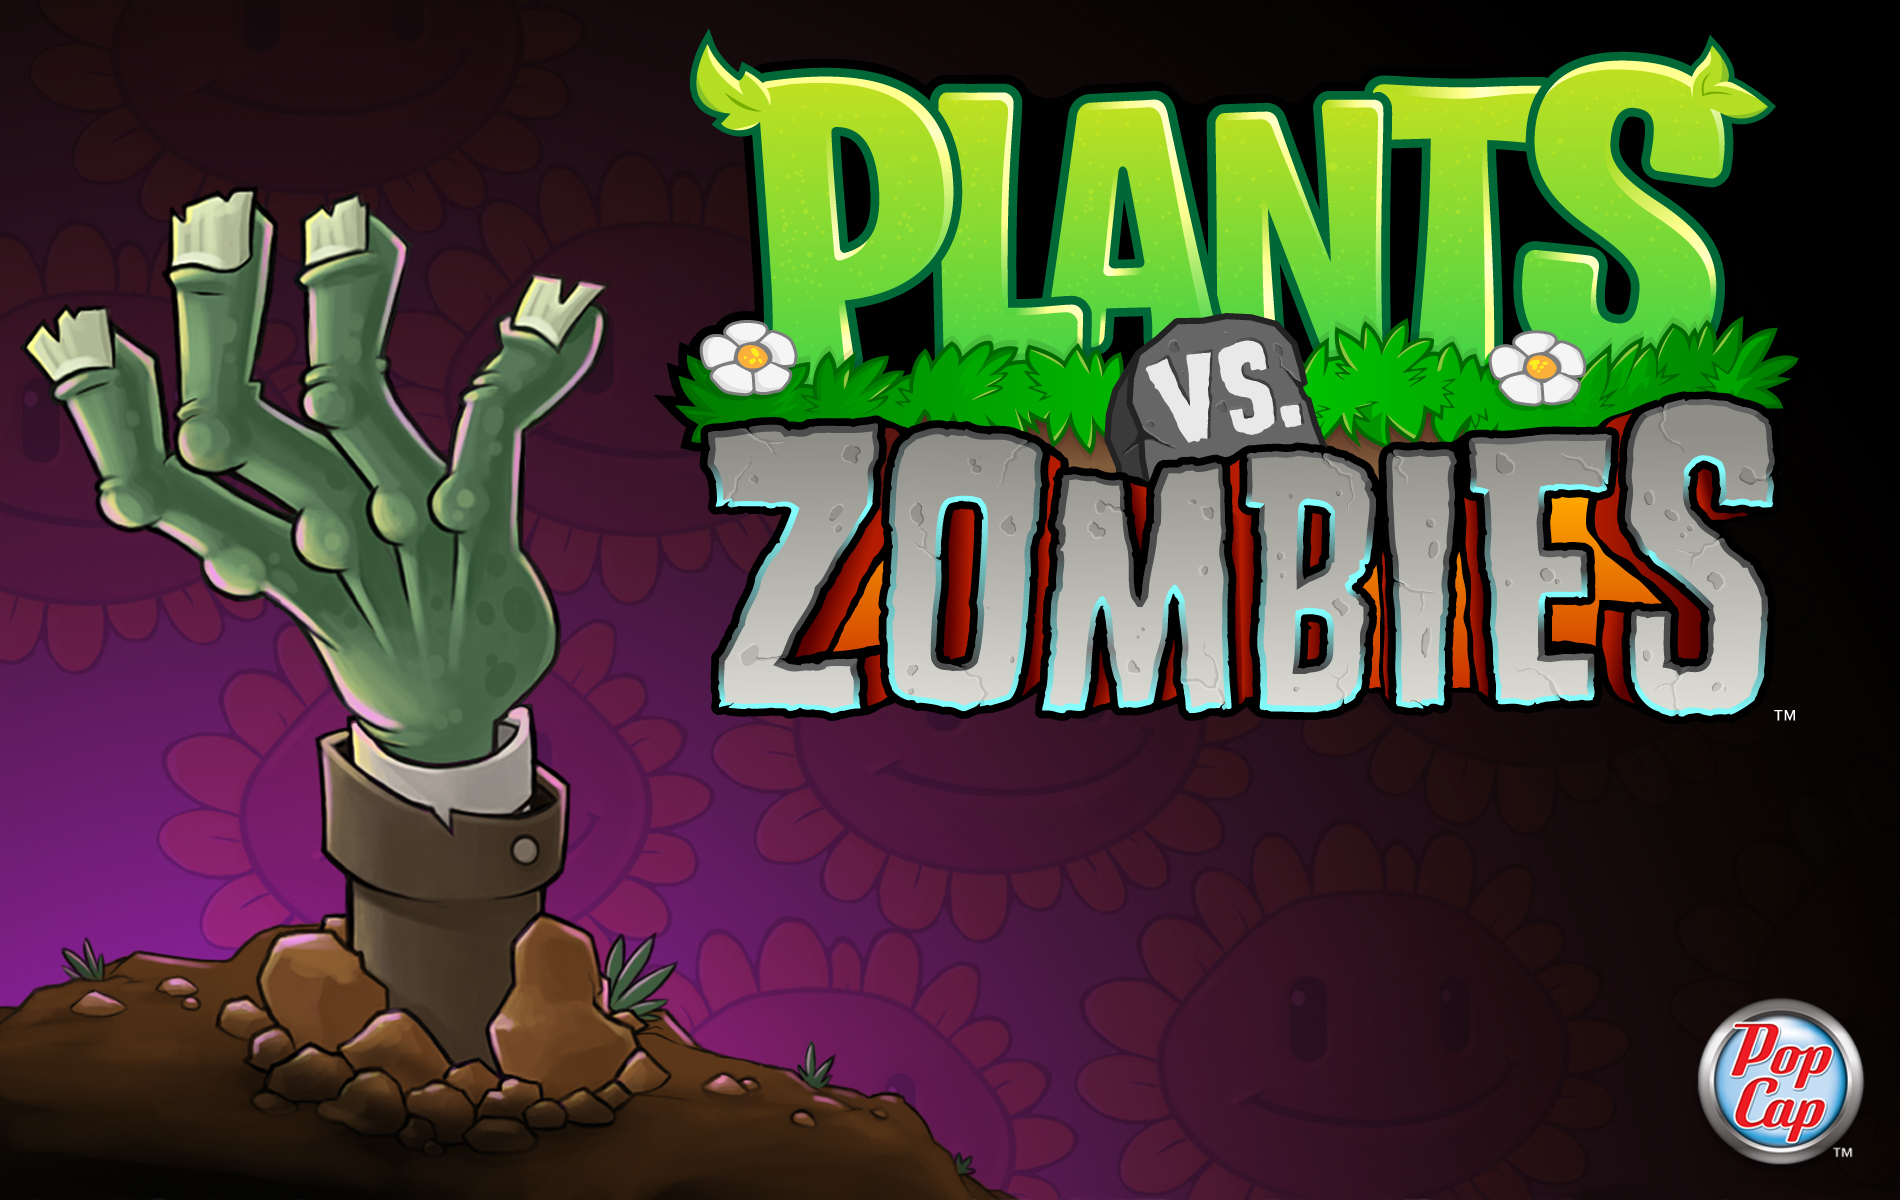 Plants vs. Zombies Pictures.